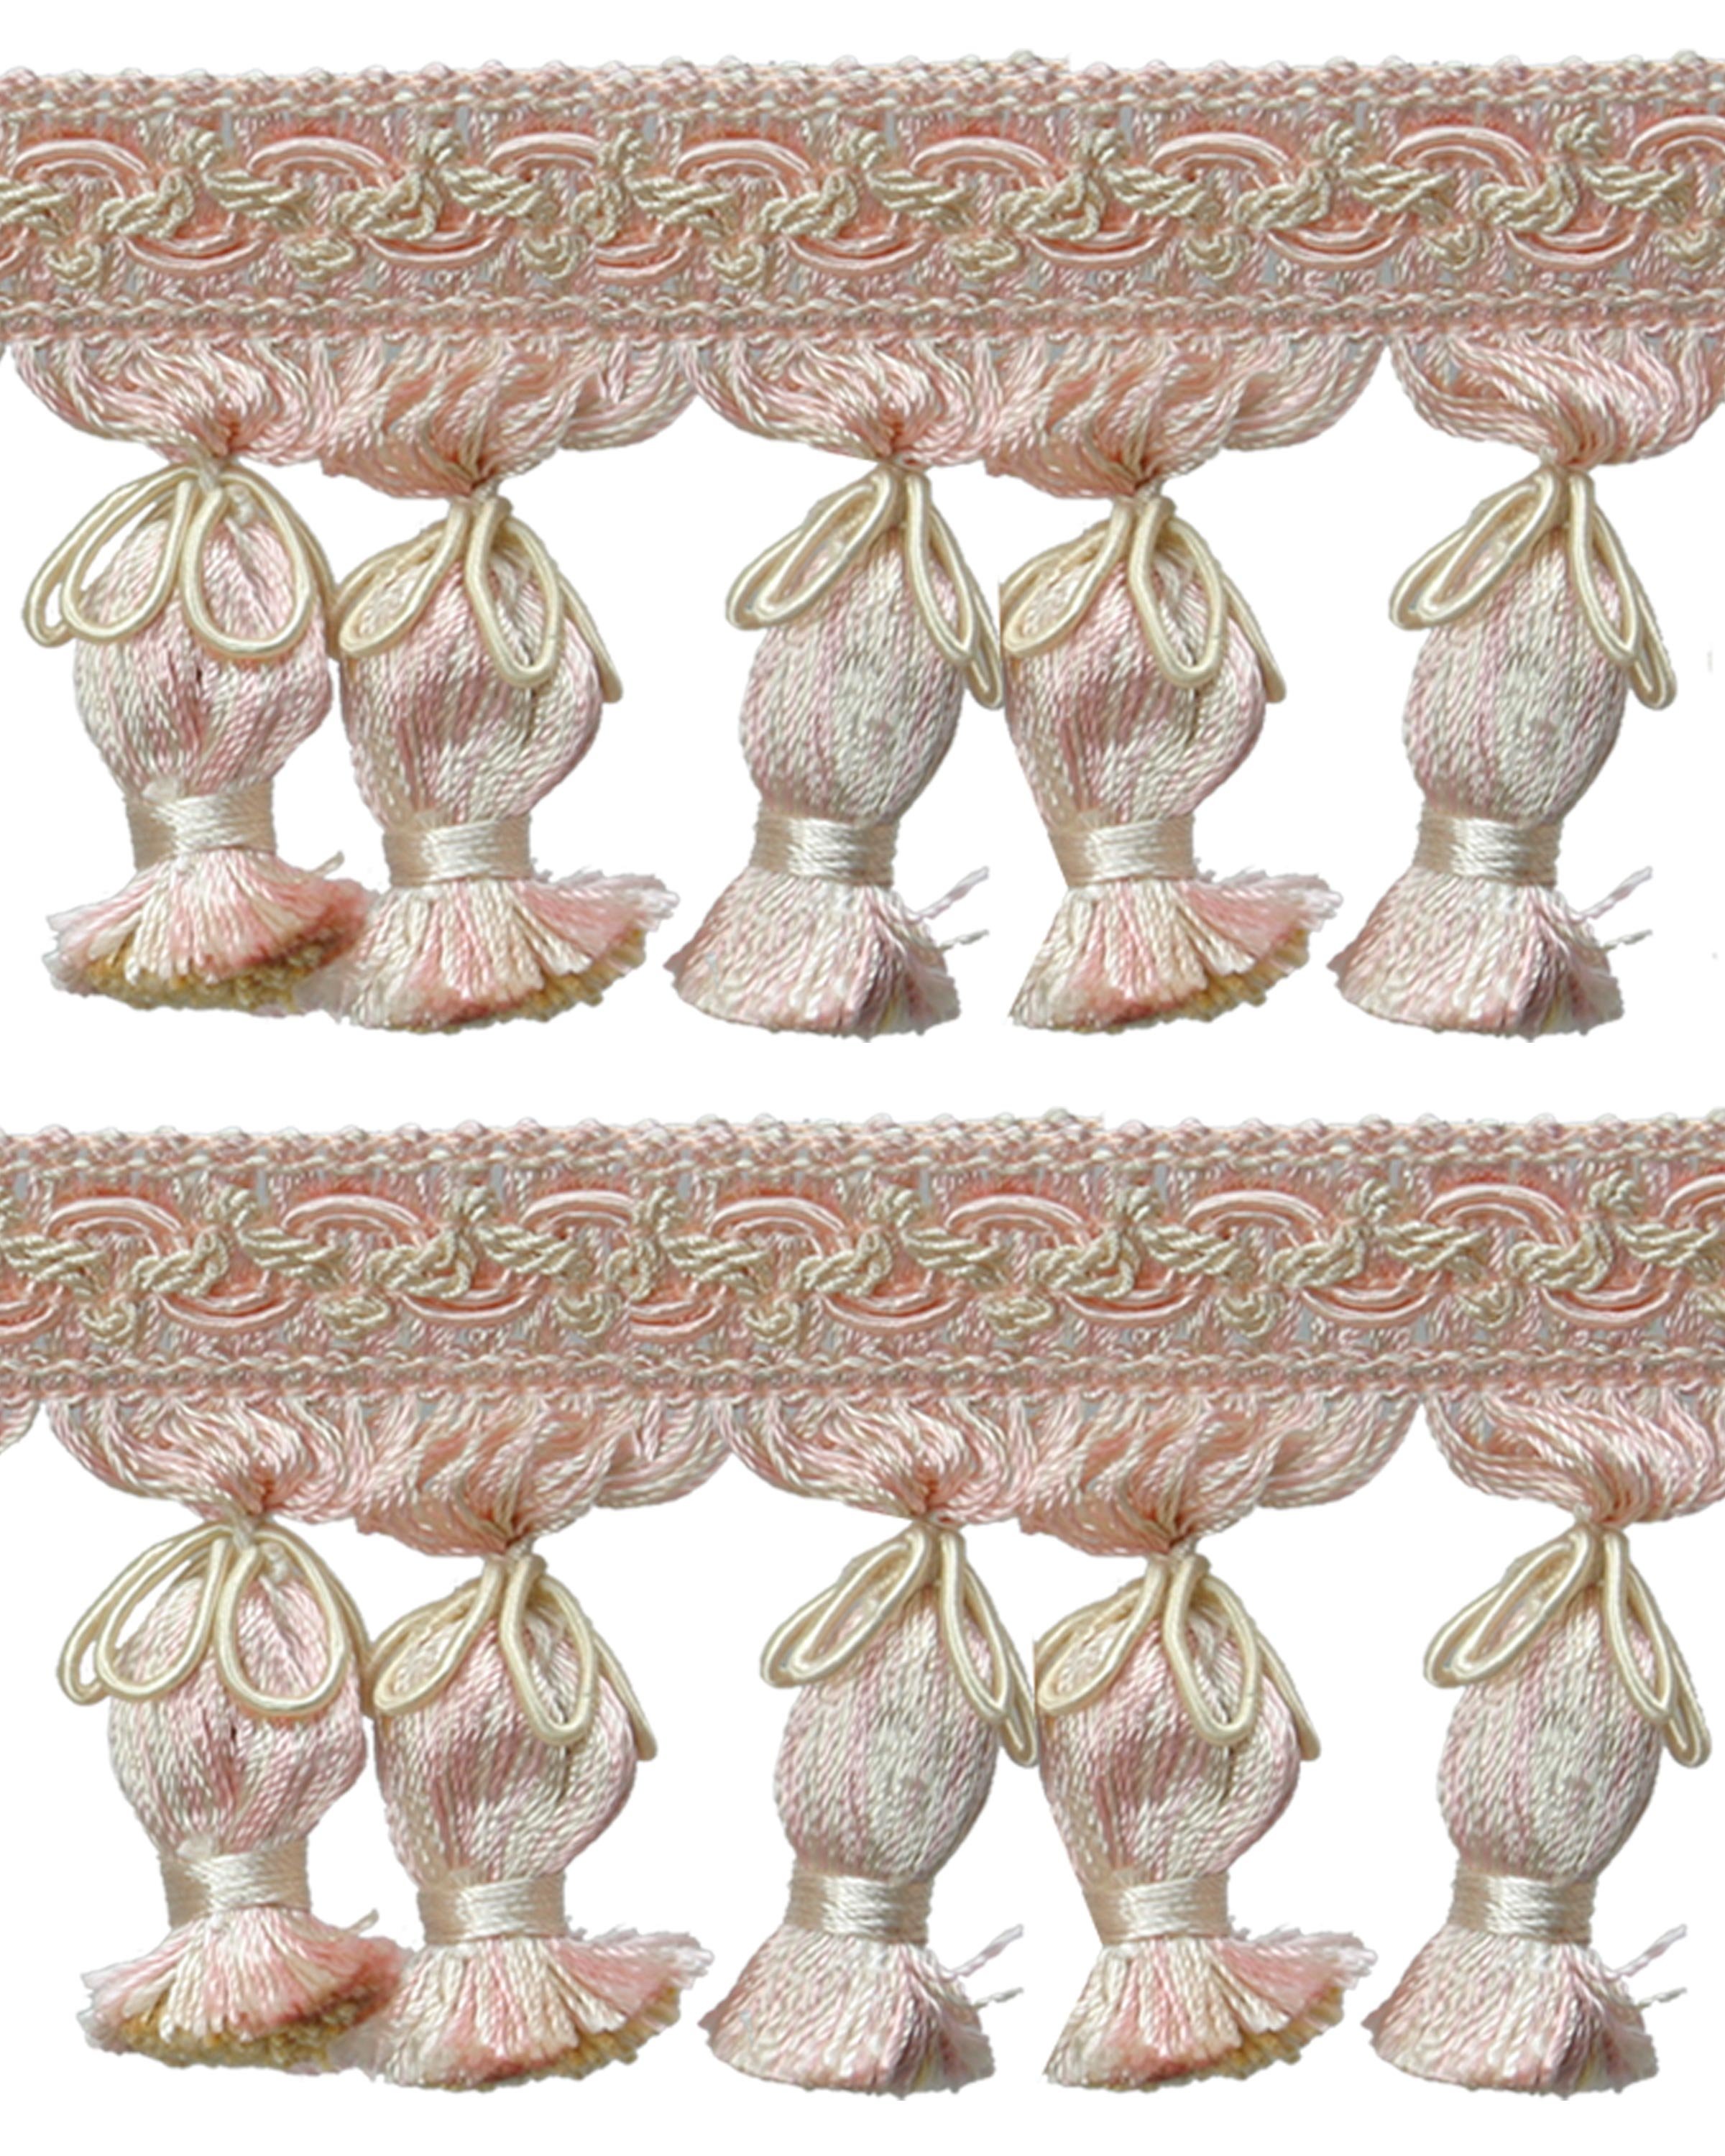 Fringe Acorn Tassels with Flower Cord - Light Pink / Cream 75mm Price is per 5 metres